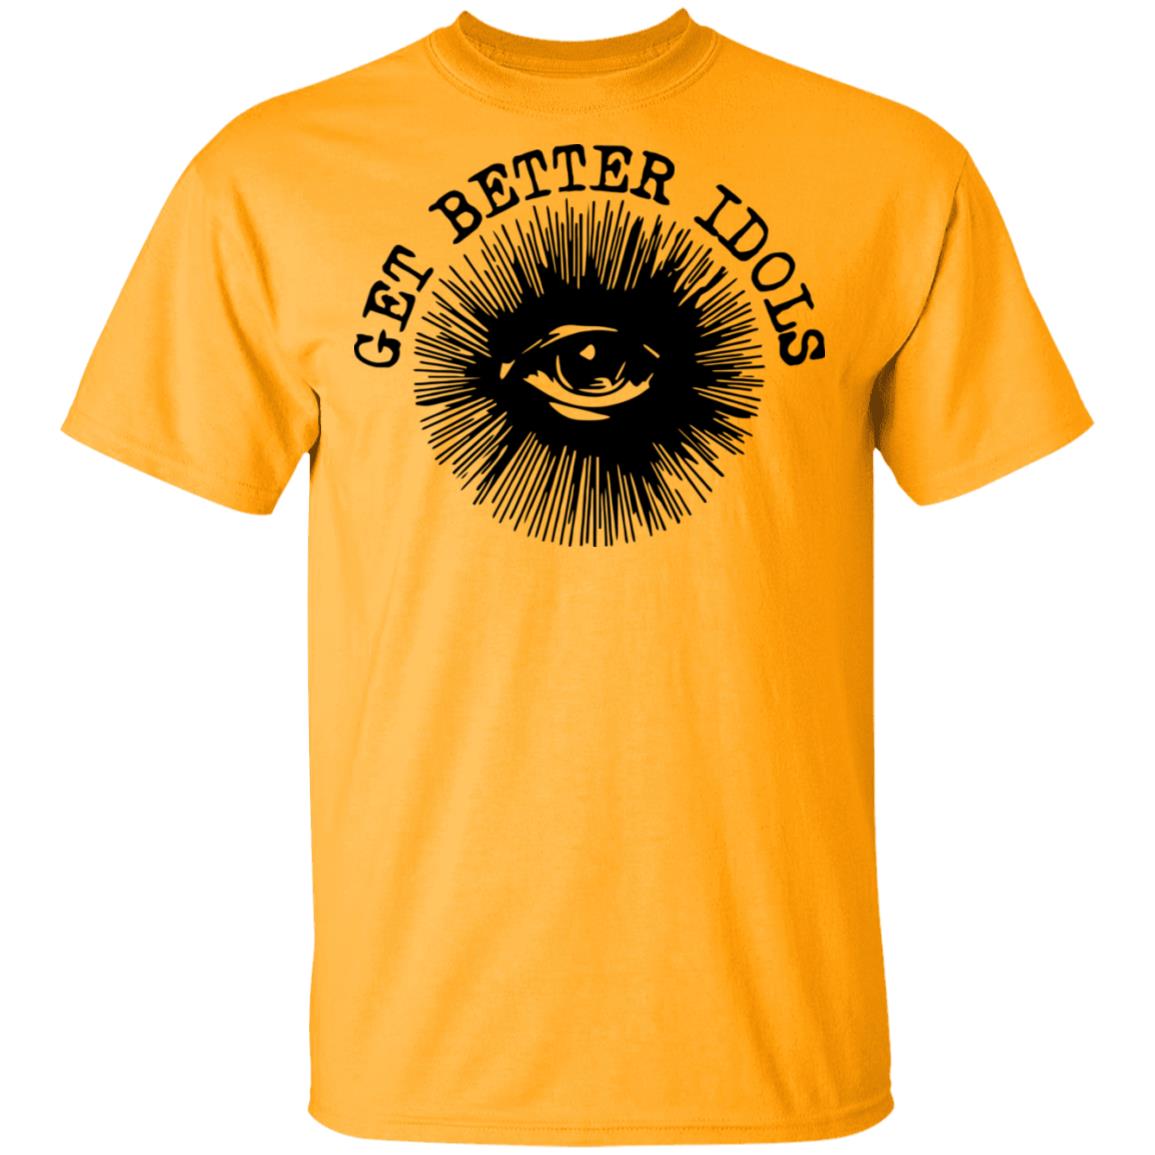 Brett gardner mlb logo shirt - Brett gardner shirt - Tipatee